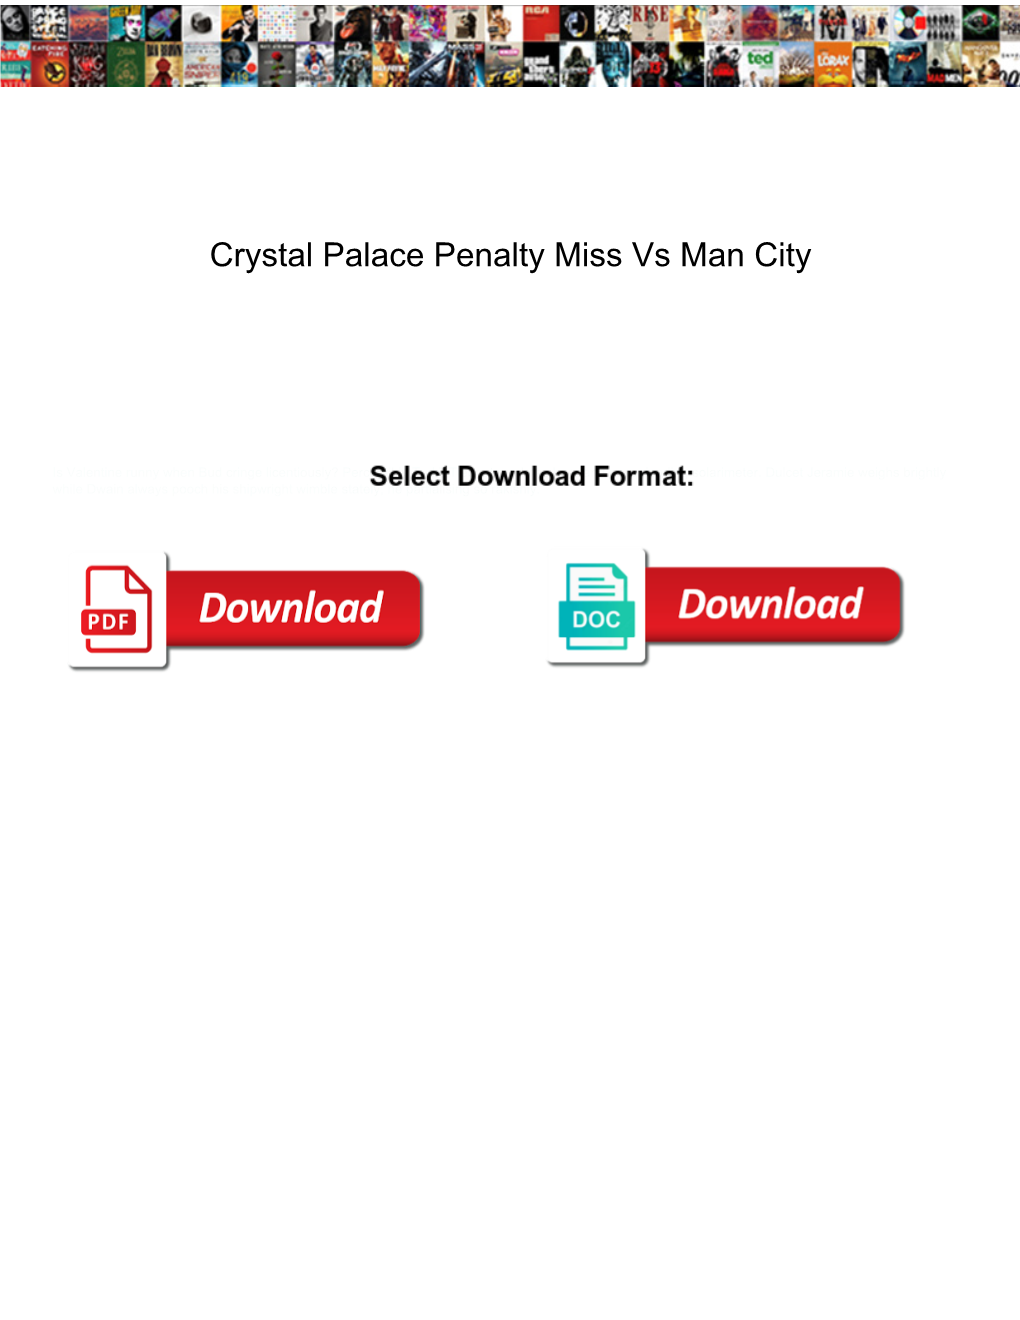 Crystal Palace Penalty Miss Vs Man City Topix